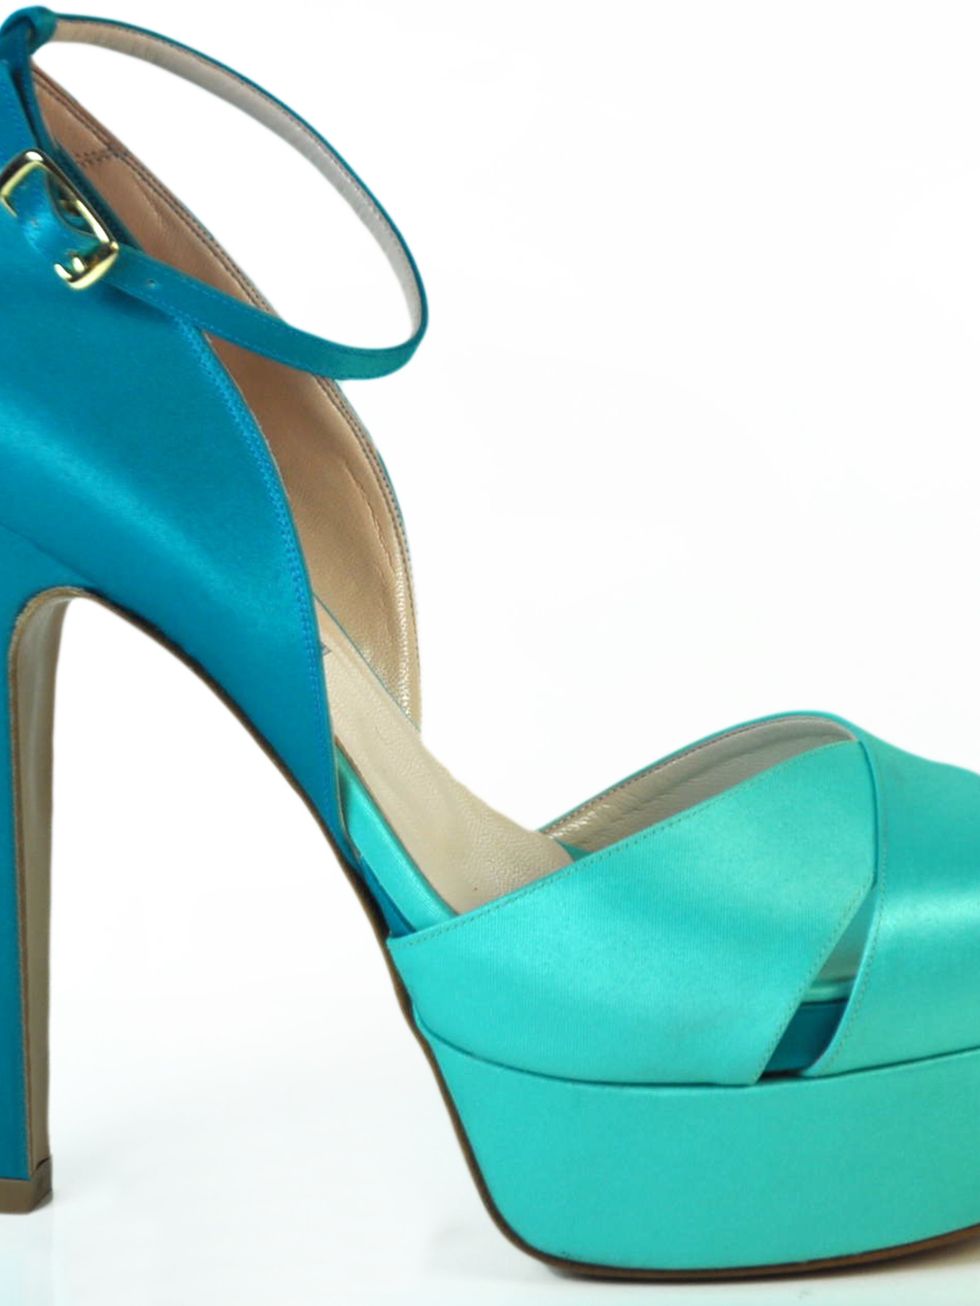 Footwear, High heels, Blue, Sandal, Teal, Aqua, Basic pump, Turquoise, Fashion, Azure, 